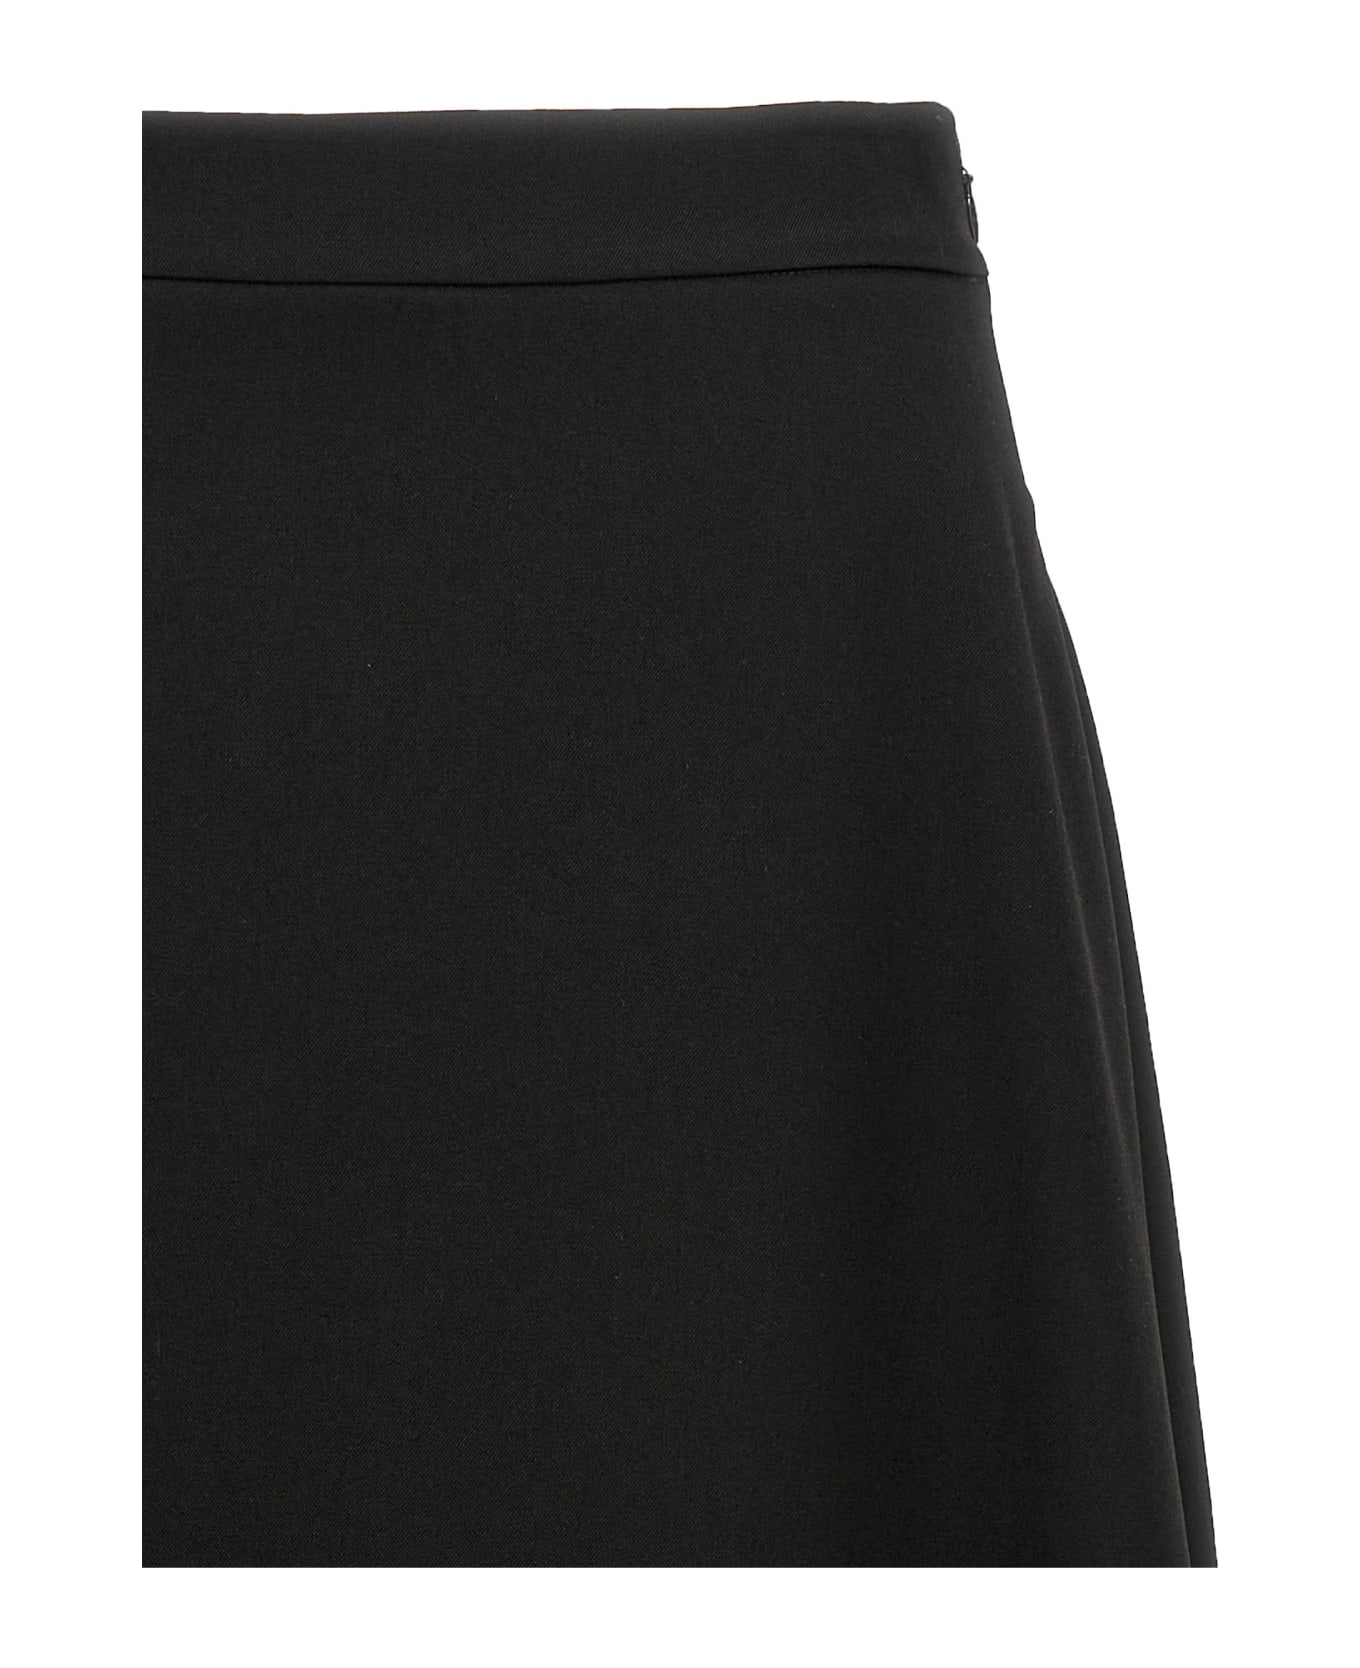 Jil Sander Asymmetrical Skirt - Black  